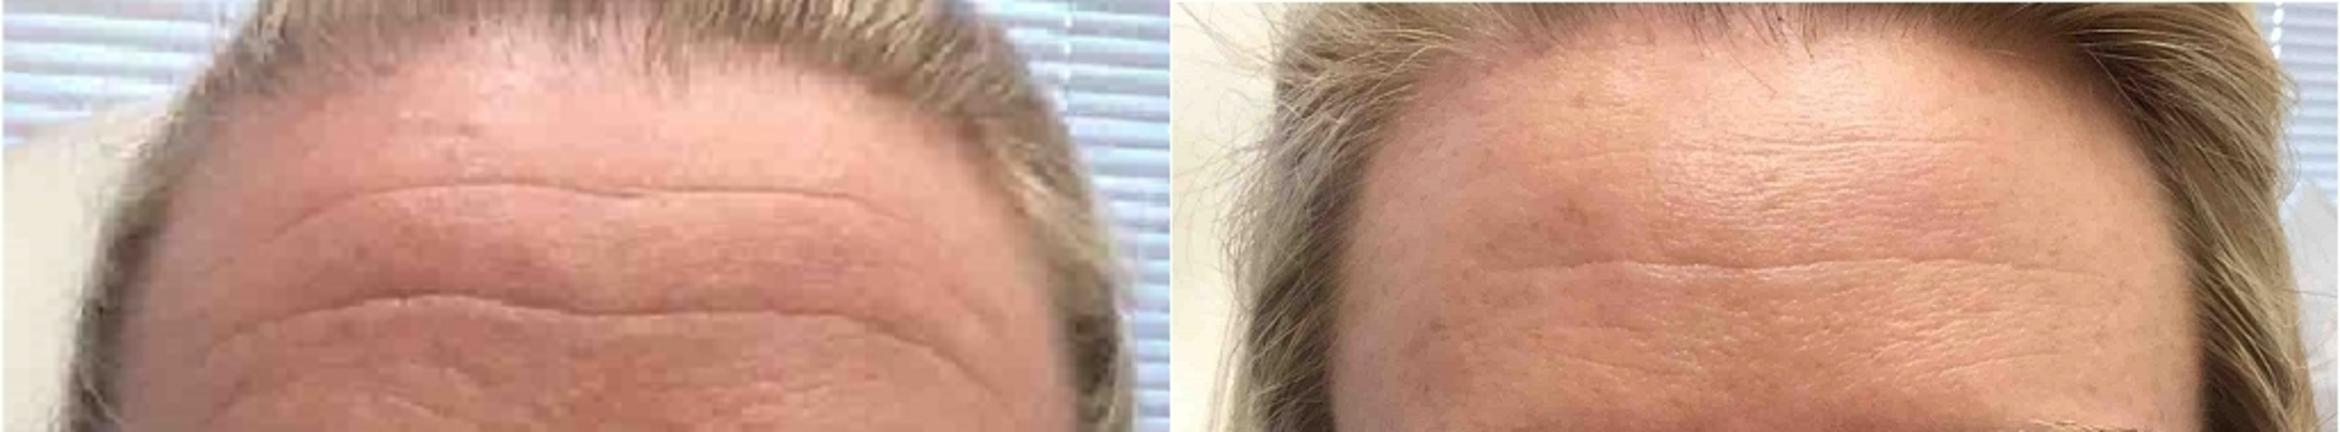 Microneedling Case 6 Before & After Front | Washington, DC | MI Skin Dermatology Center: Melda Isaac, MD